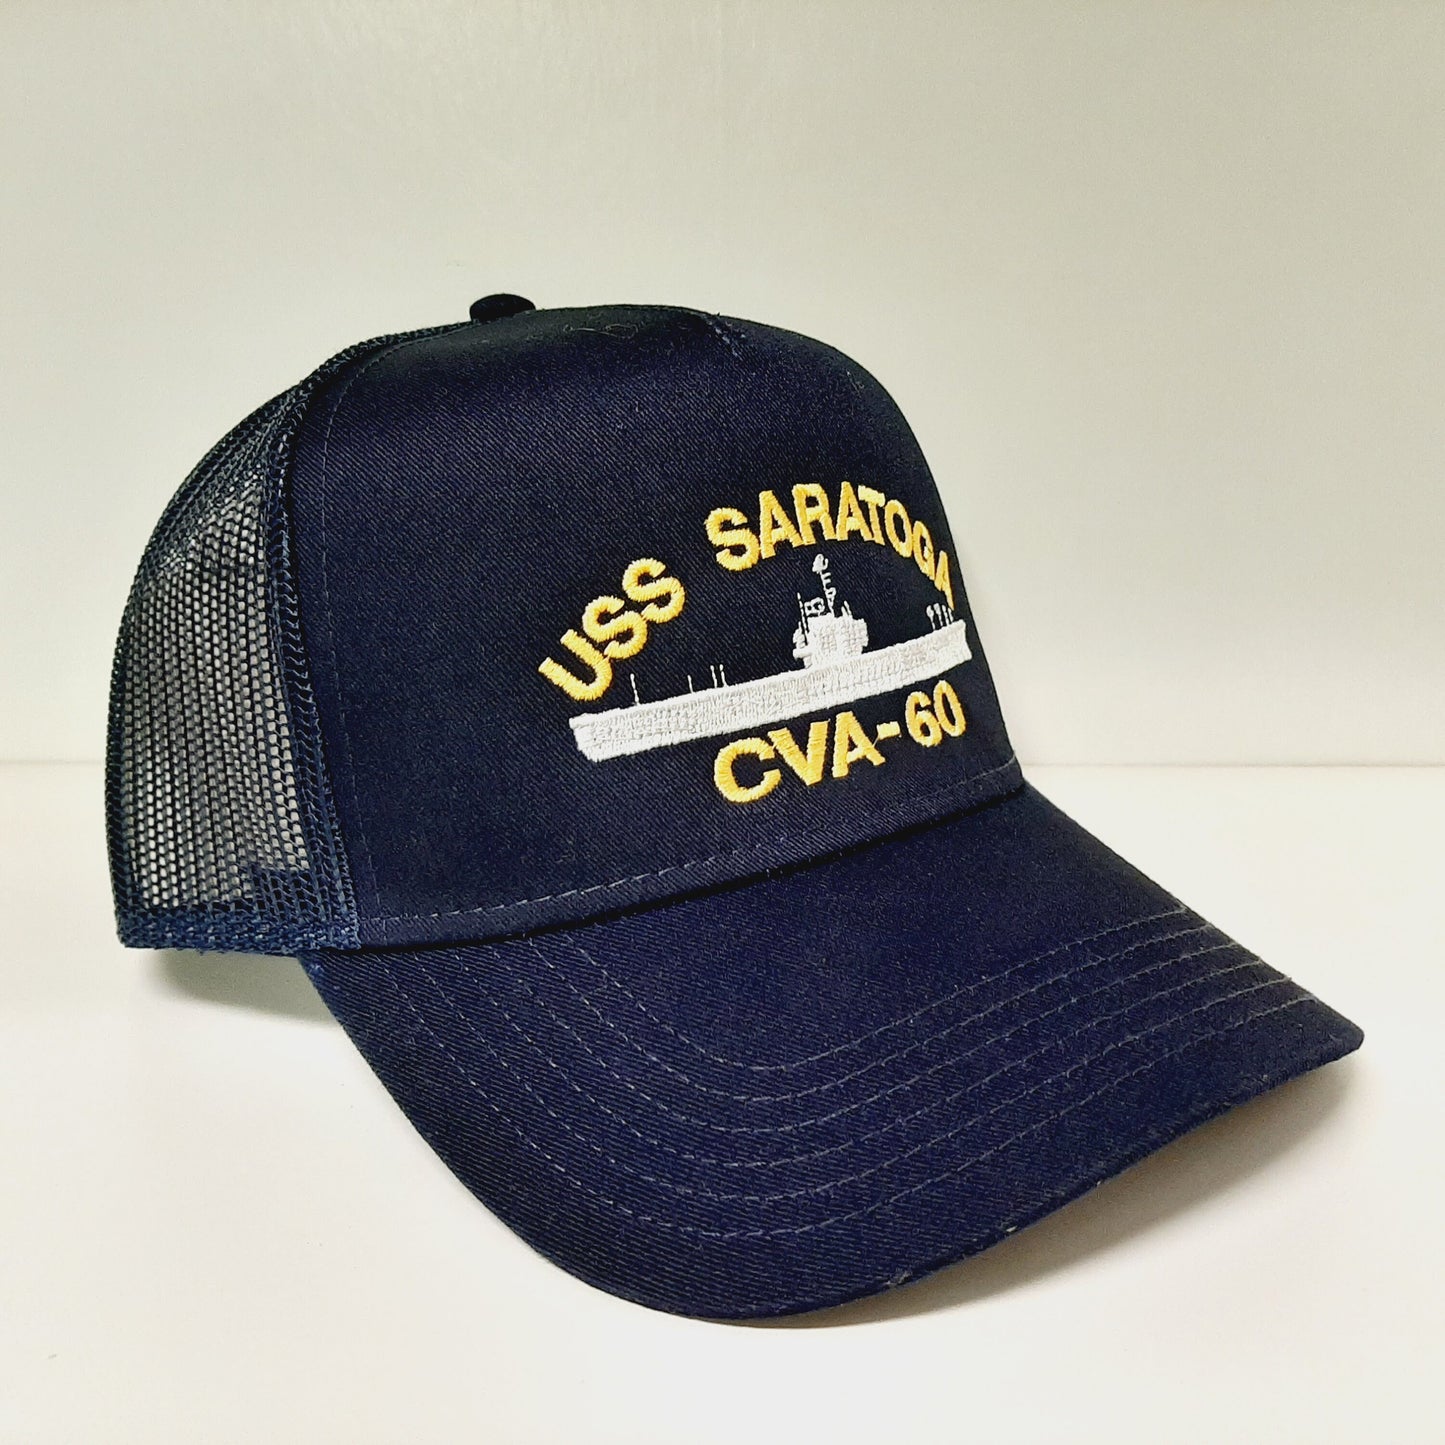 USS Saratoga CVA-60 Navy Ship Baseball Cap Blue Mesh Snapback 3.5 inch Profile Cotton Front Panel